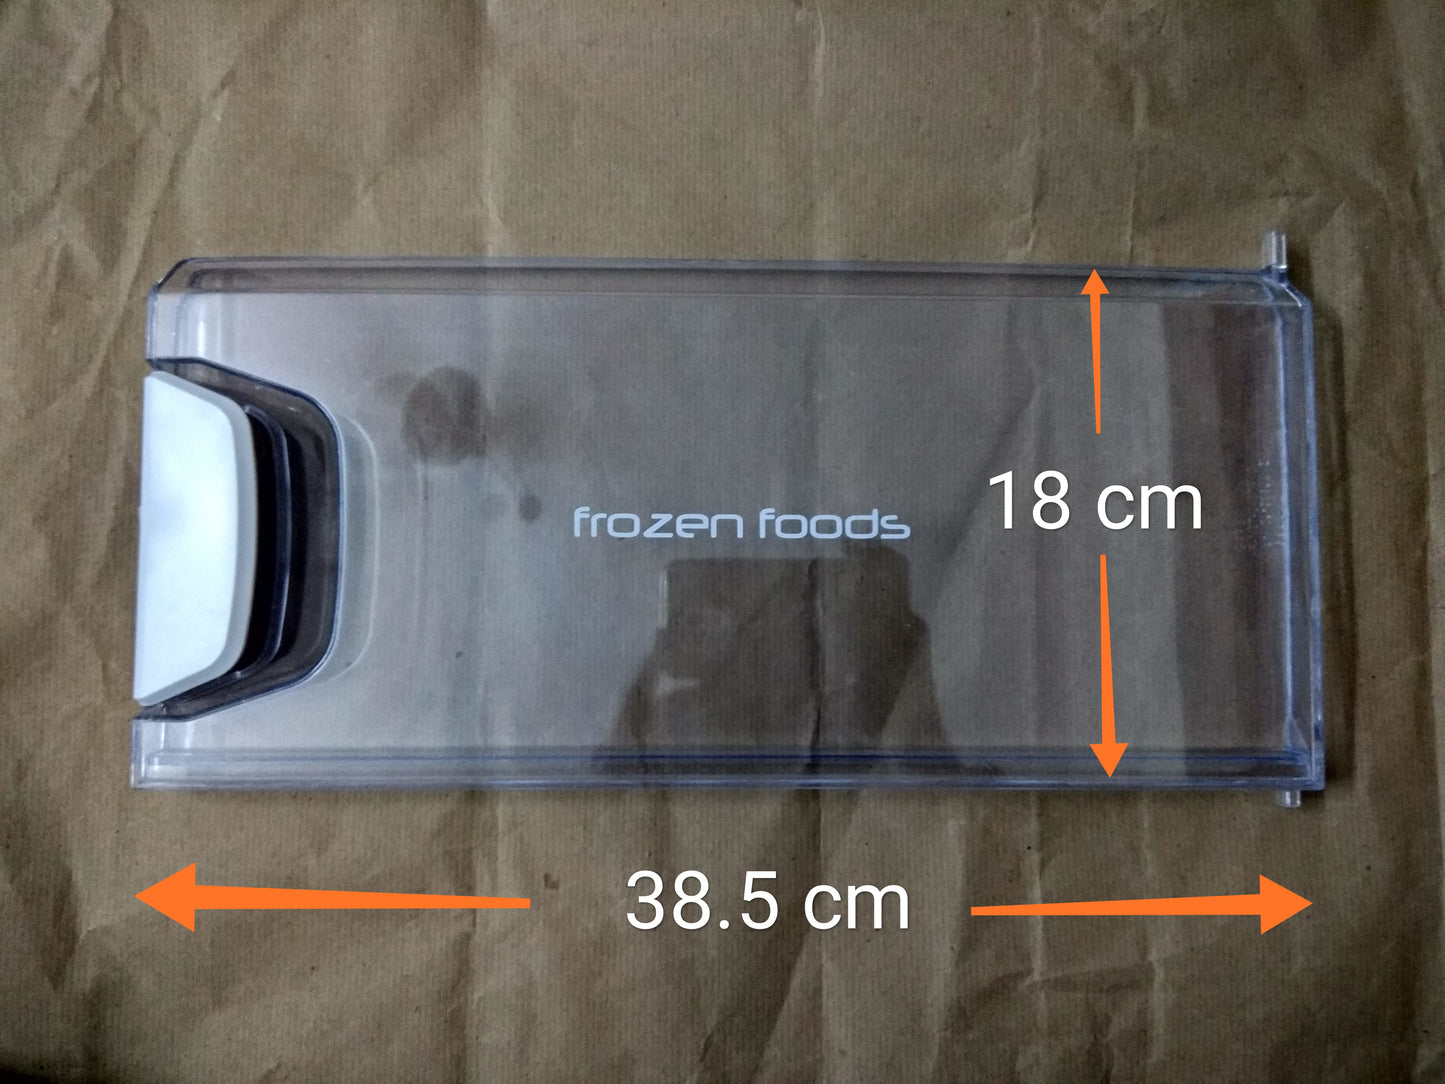 Freezer door for godrej edge pro 190 litres refrigerator (White Handle) Length 38.5 CM Breath 18 CM